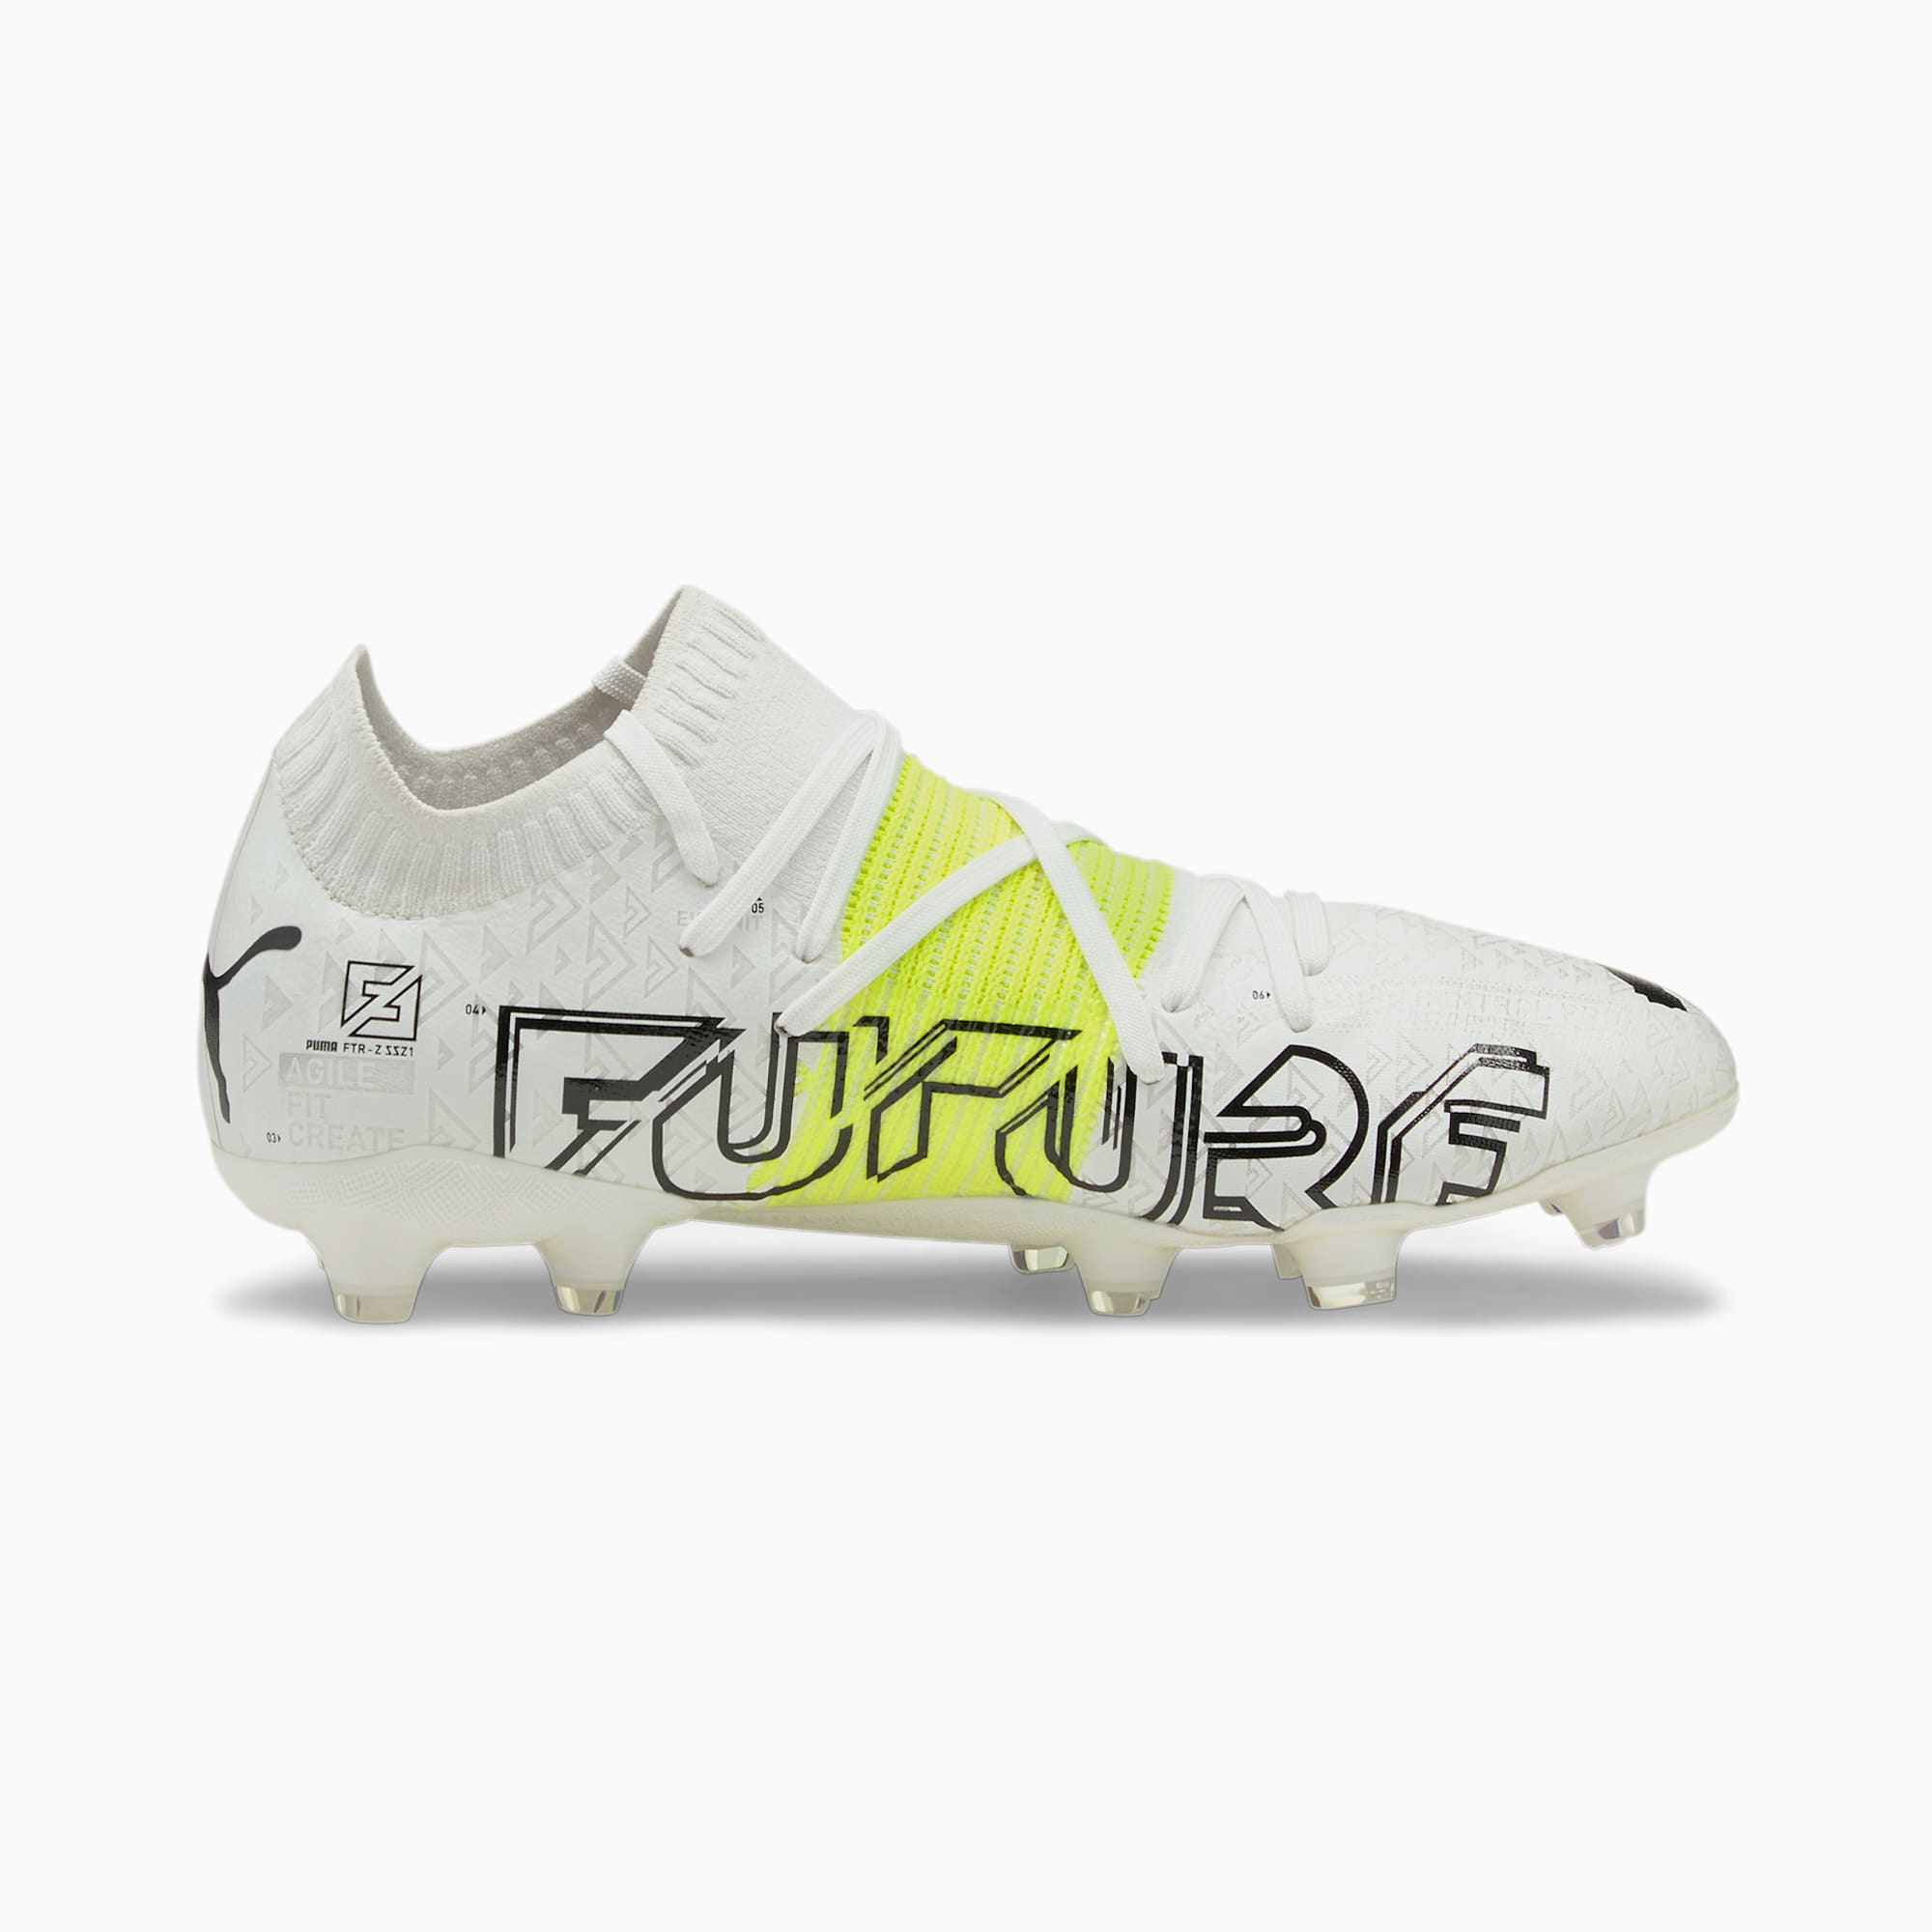 Future Z 1 1 Teaser Fg Ag Men S Soccer Cleats Puma Us